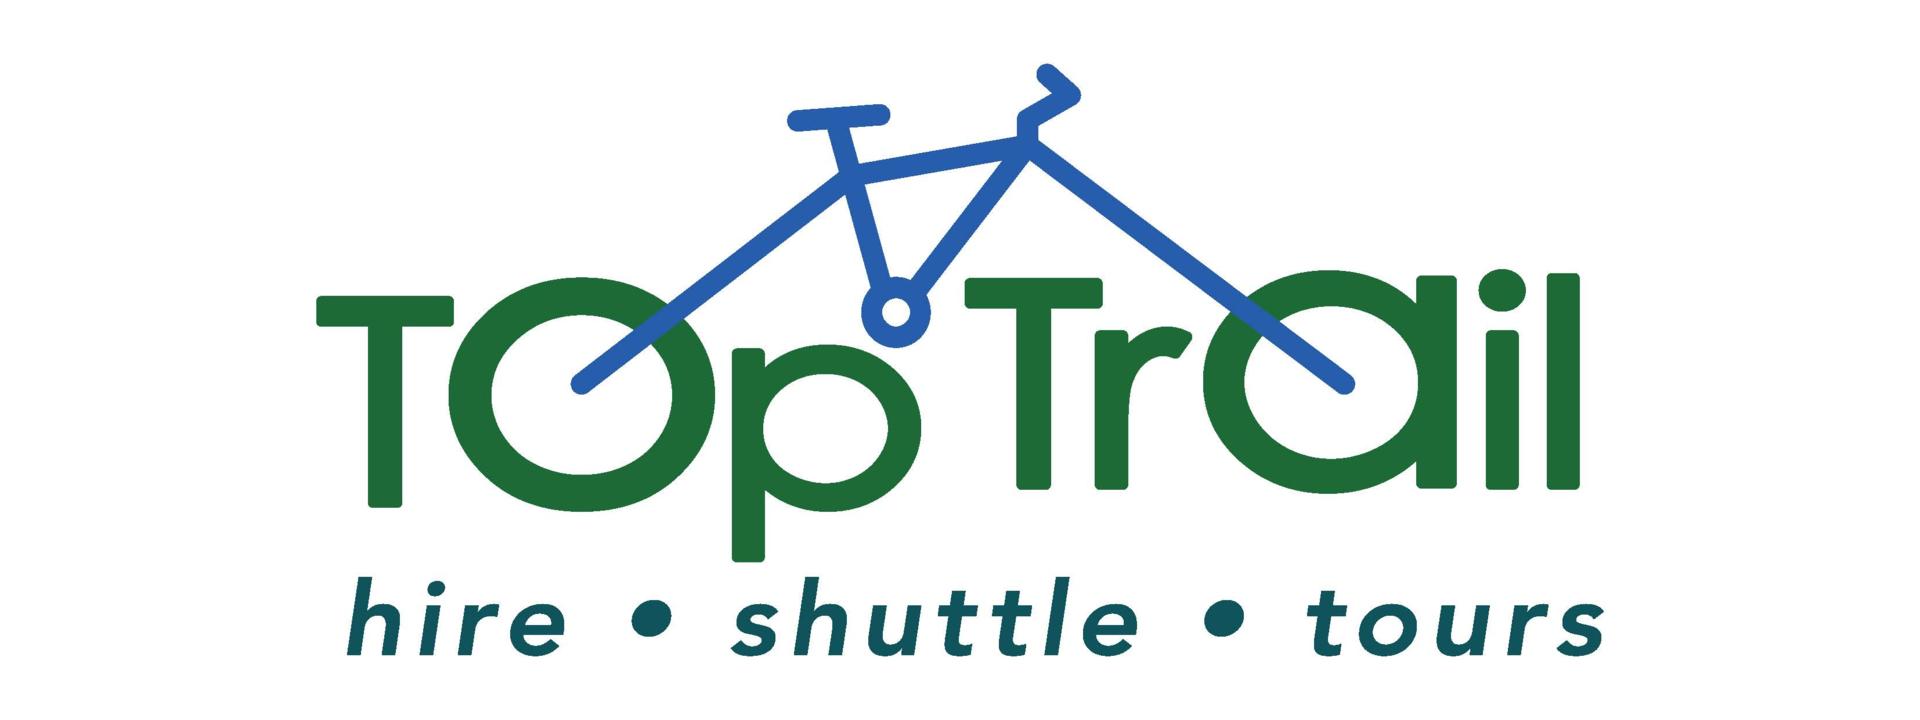 top-trail-logo-2021.jpg